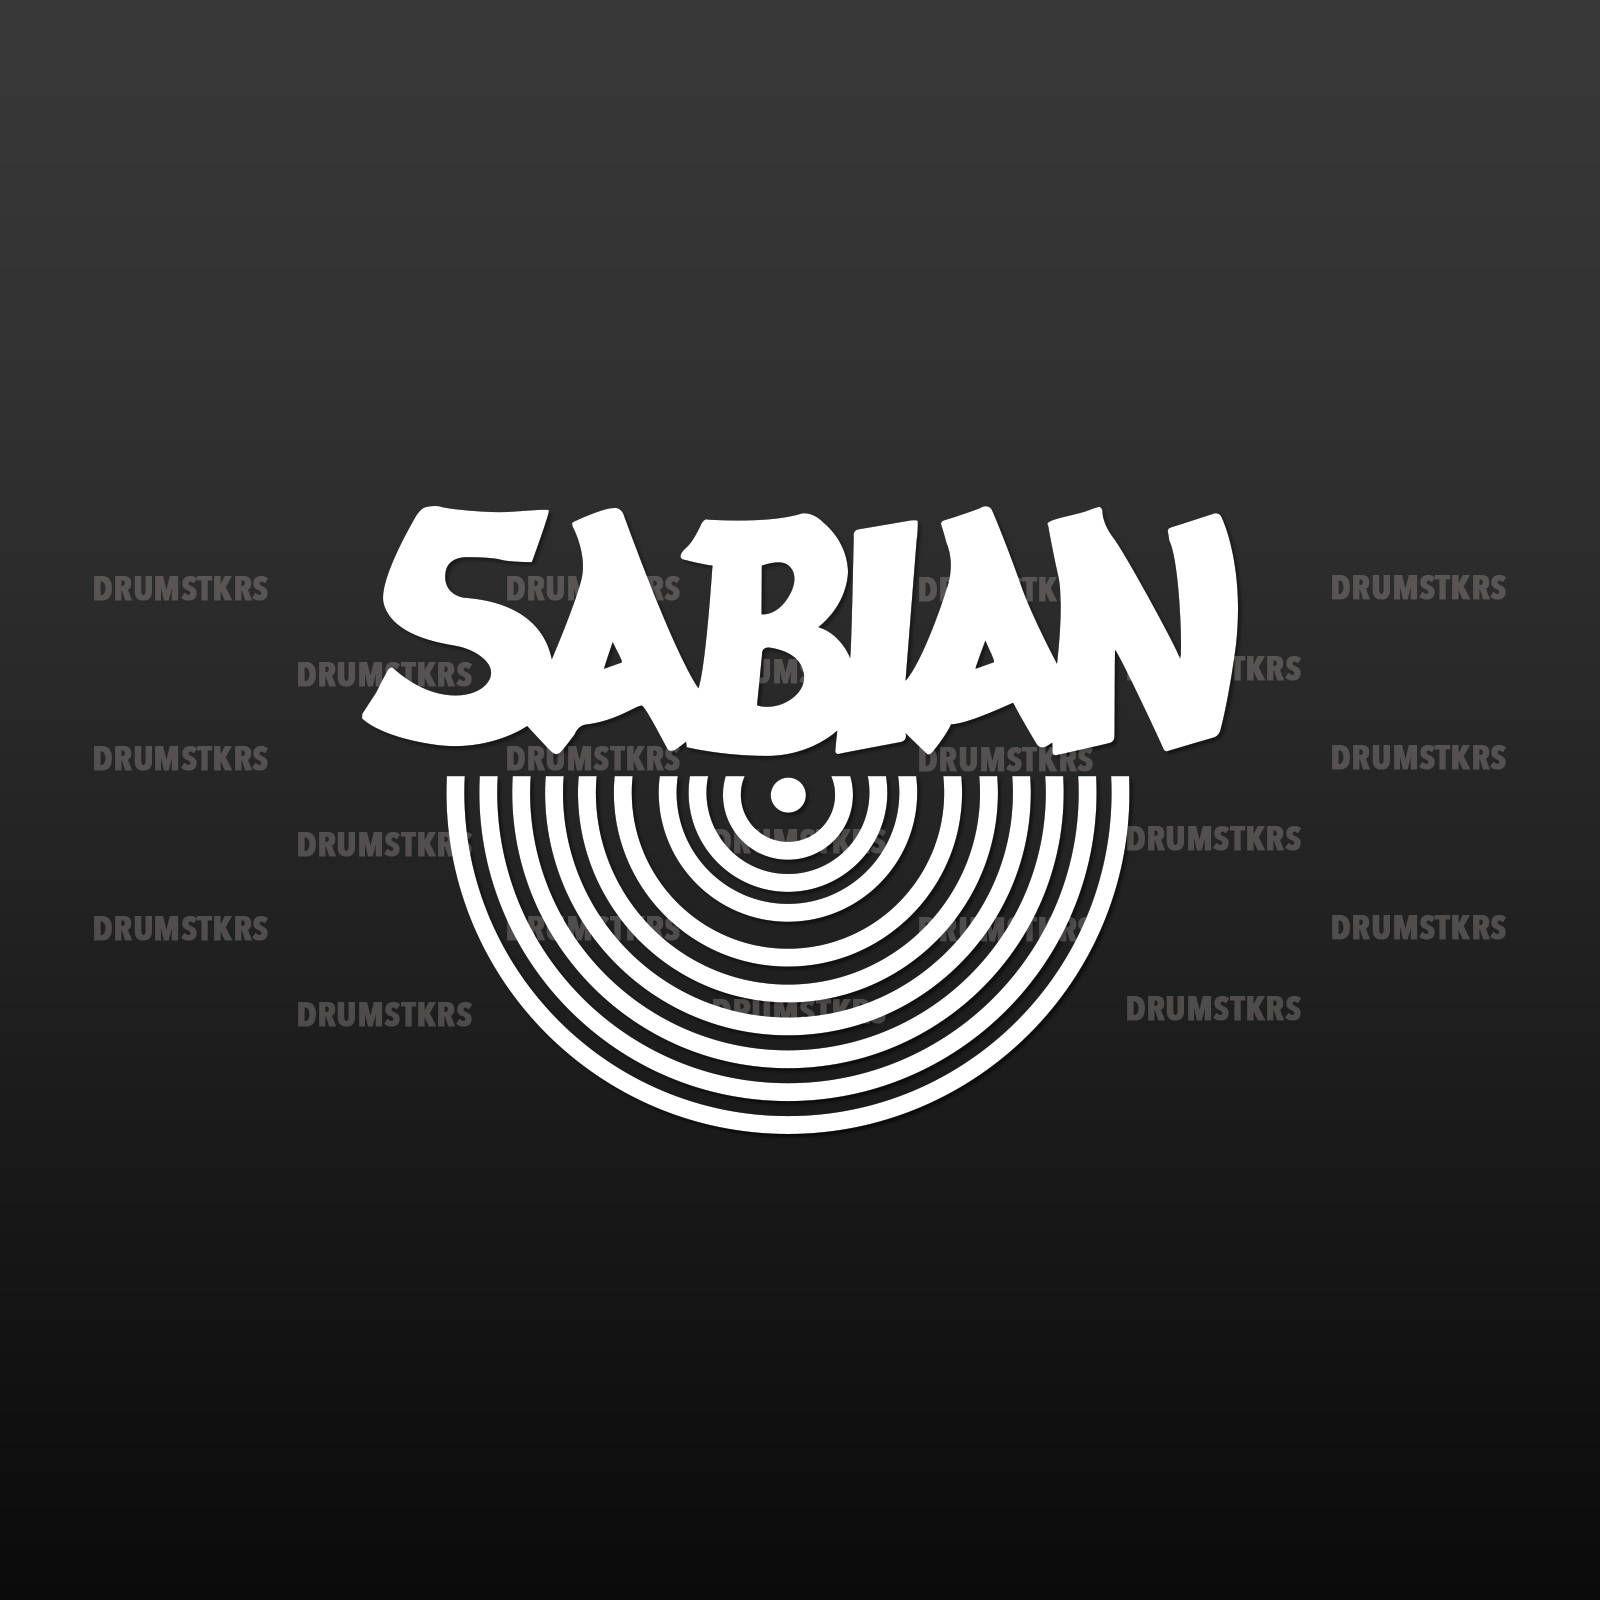 Sabian Logo - Sabian Cymbals logo for Bass Drum head - Die Cut - no background